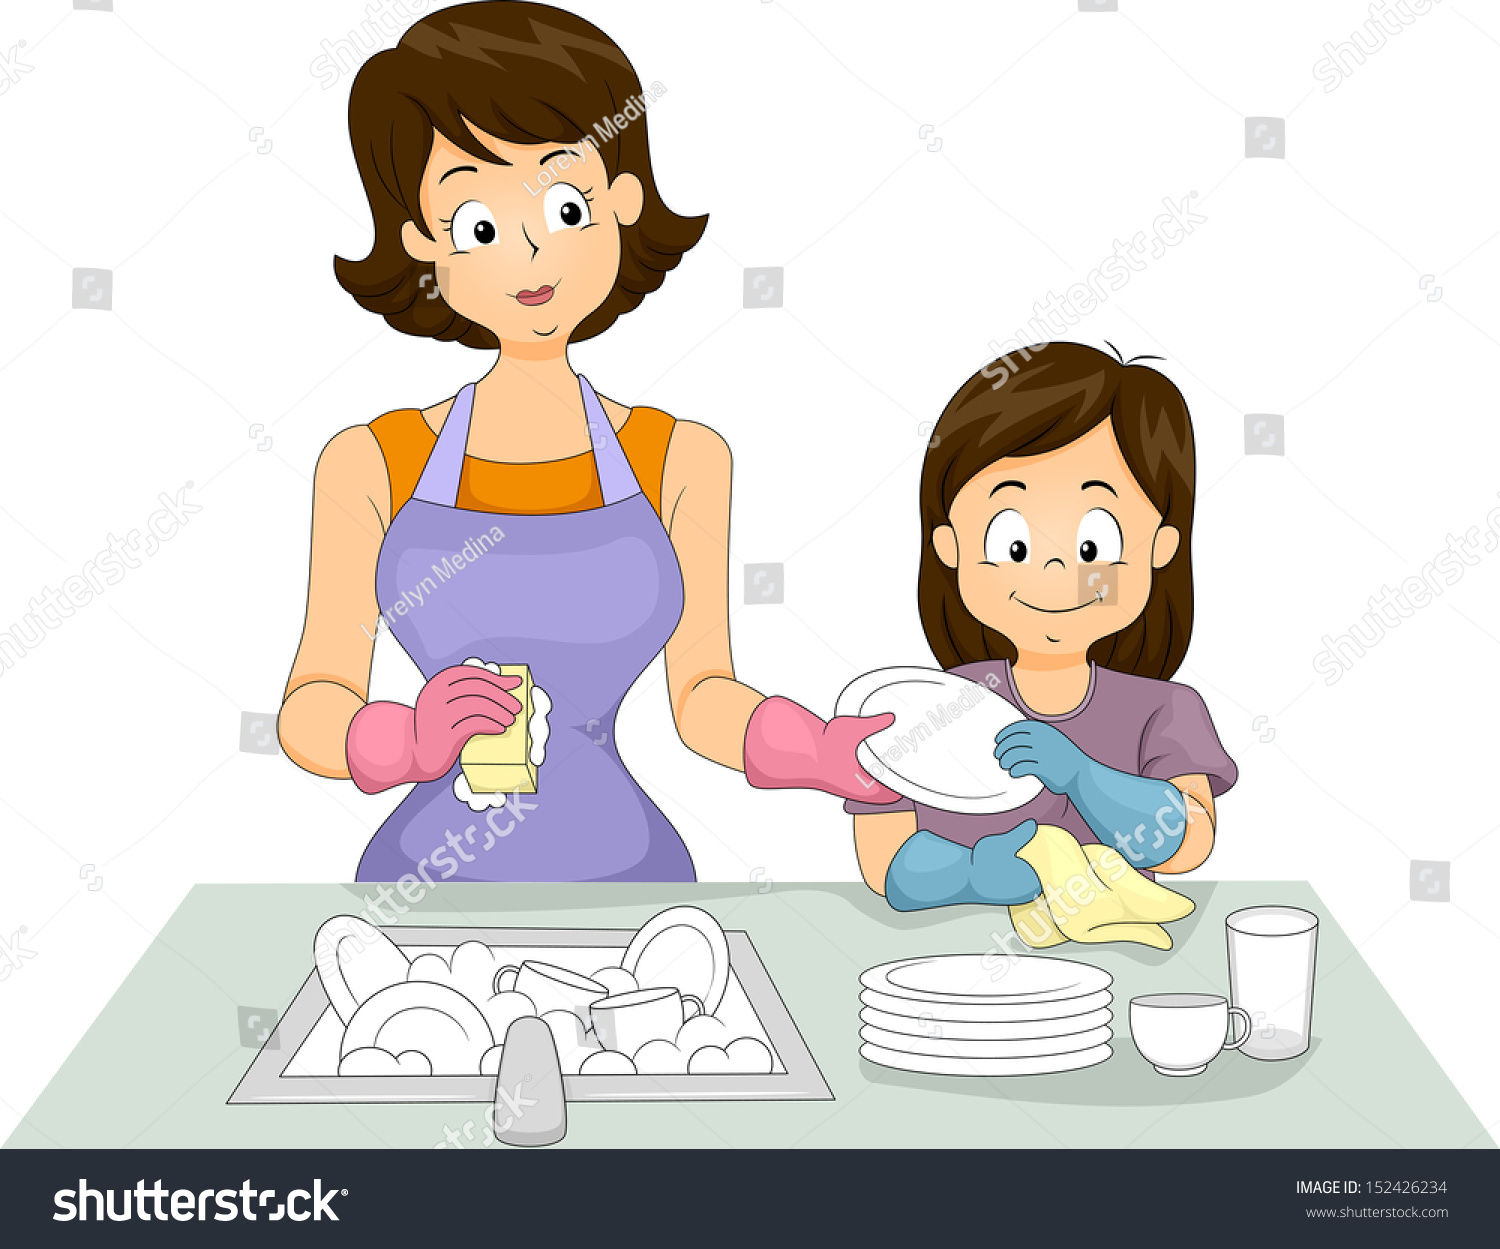 Дочка моет посуду. Картина для детей мама моет посуду. Мама с дочкой моют посуду. Мама моет посуду картинки для детей. Мама вытирает посуду для детей.